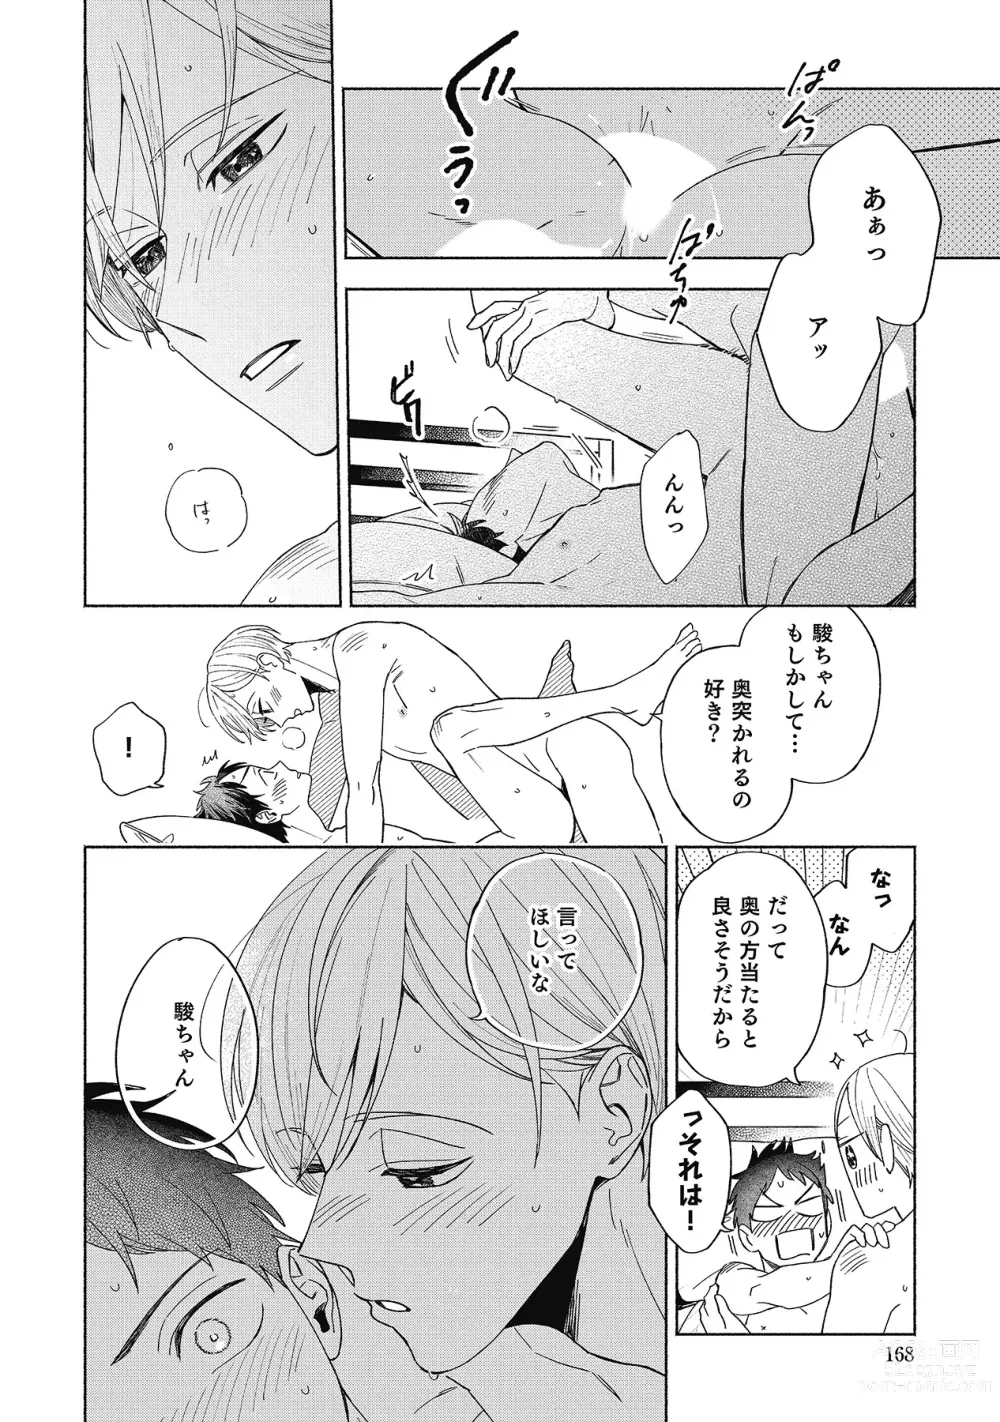 Page 168 of manga Sentimental Darling